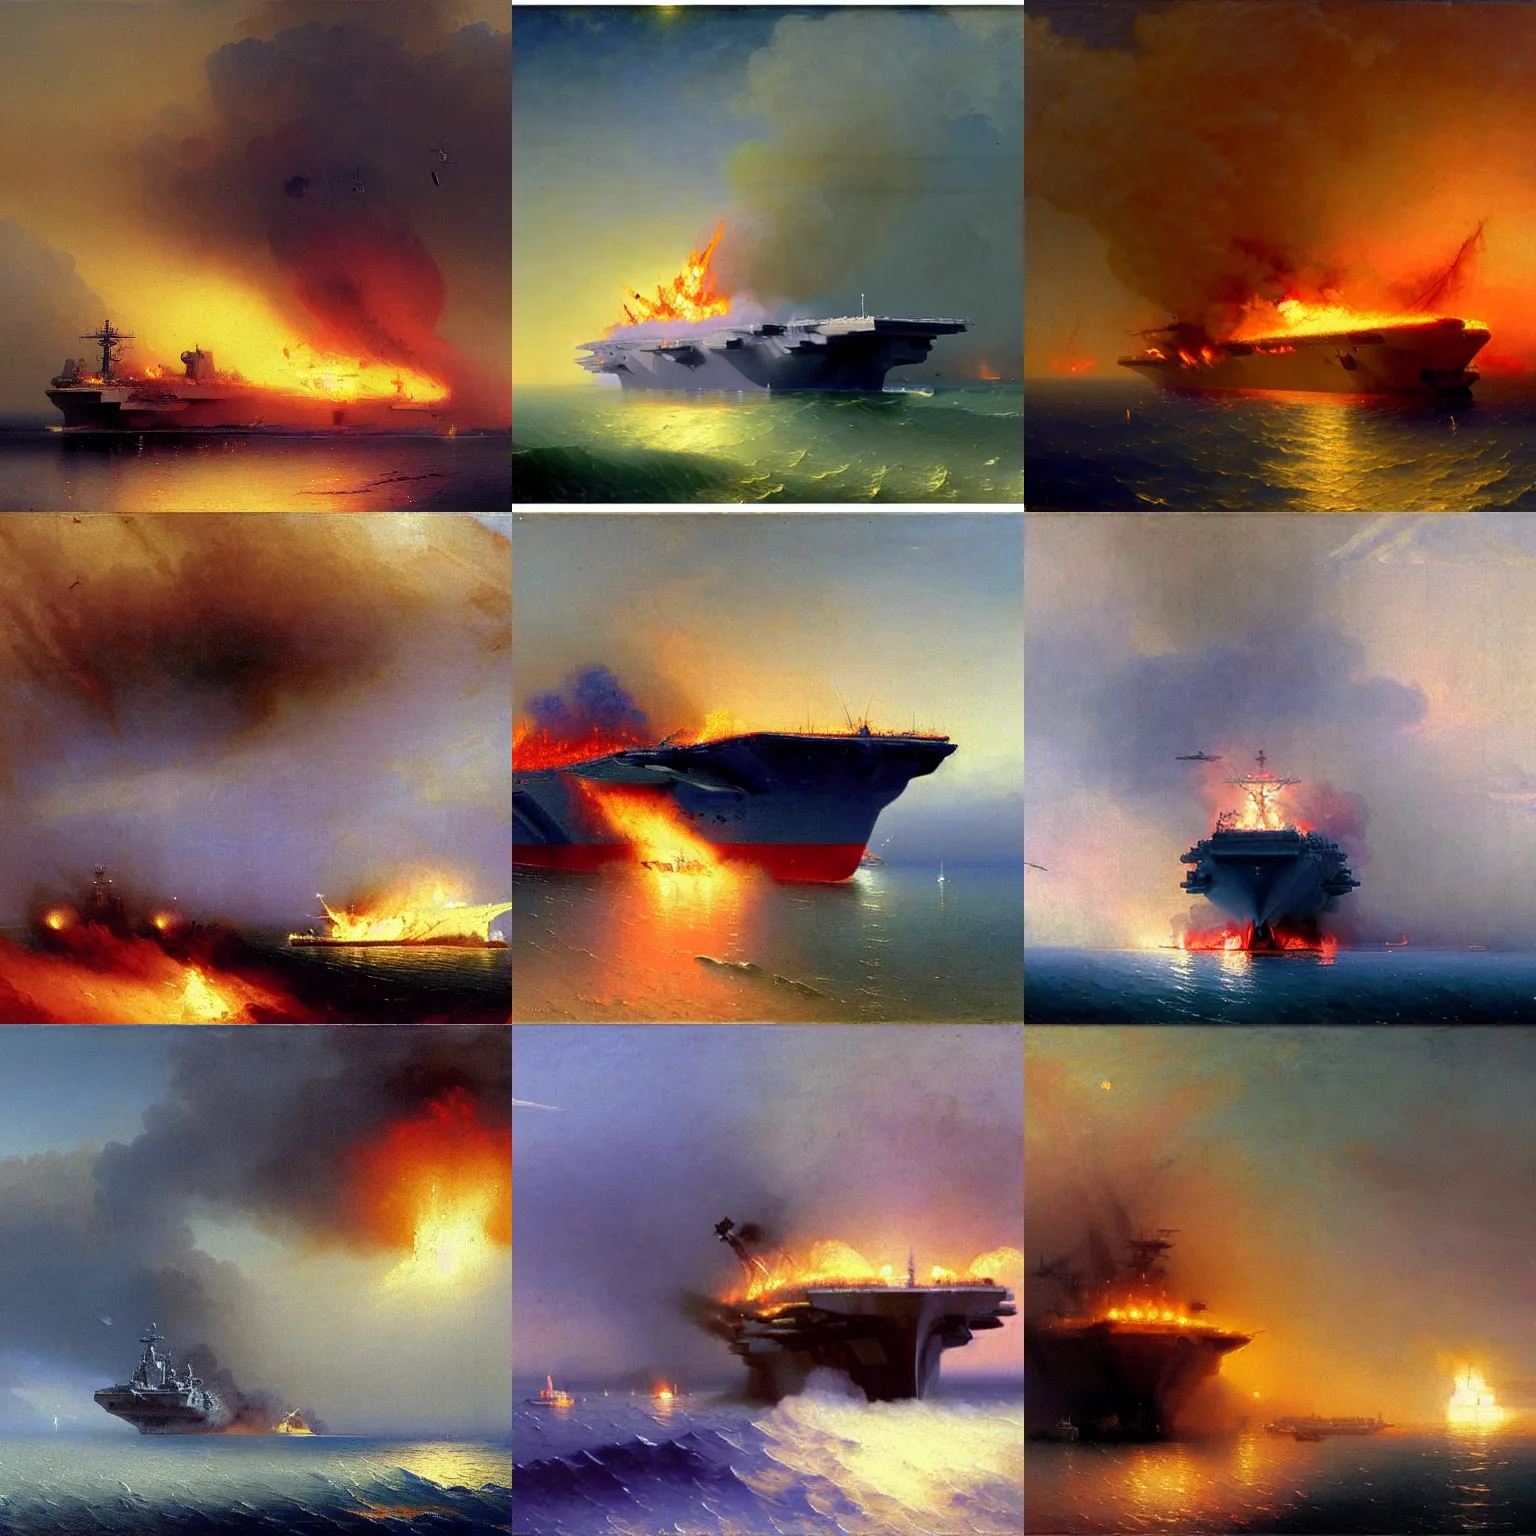 Prompt: Aircraft carrier CVN-65 Enterprise burning, oil-on-canvas by Ivan Aivazovsky